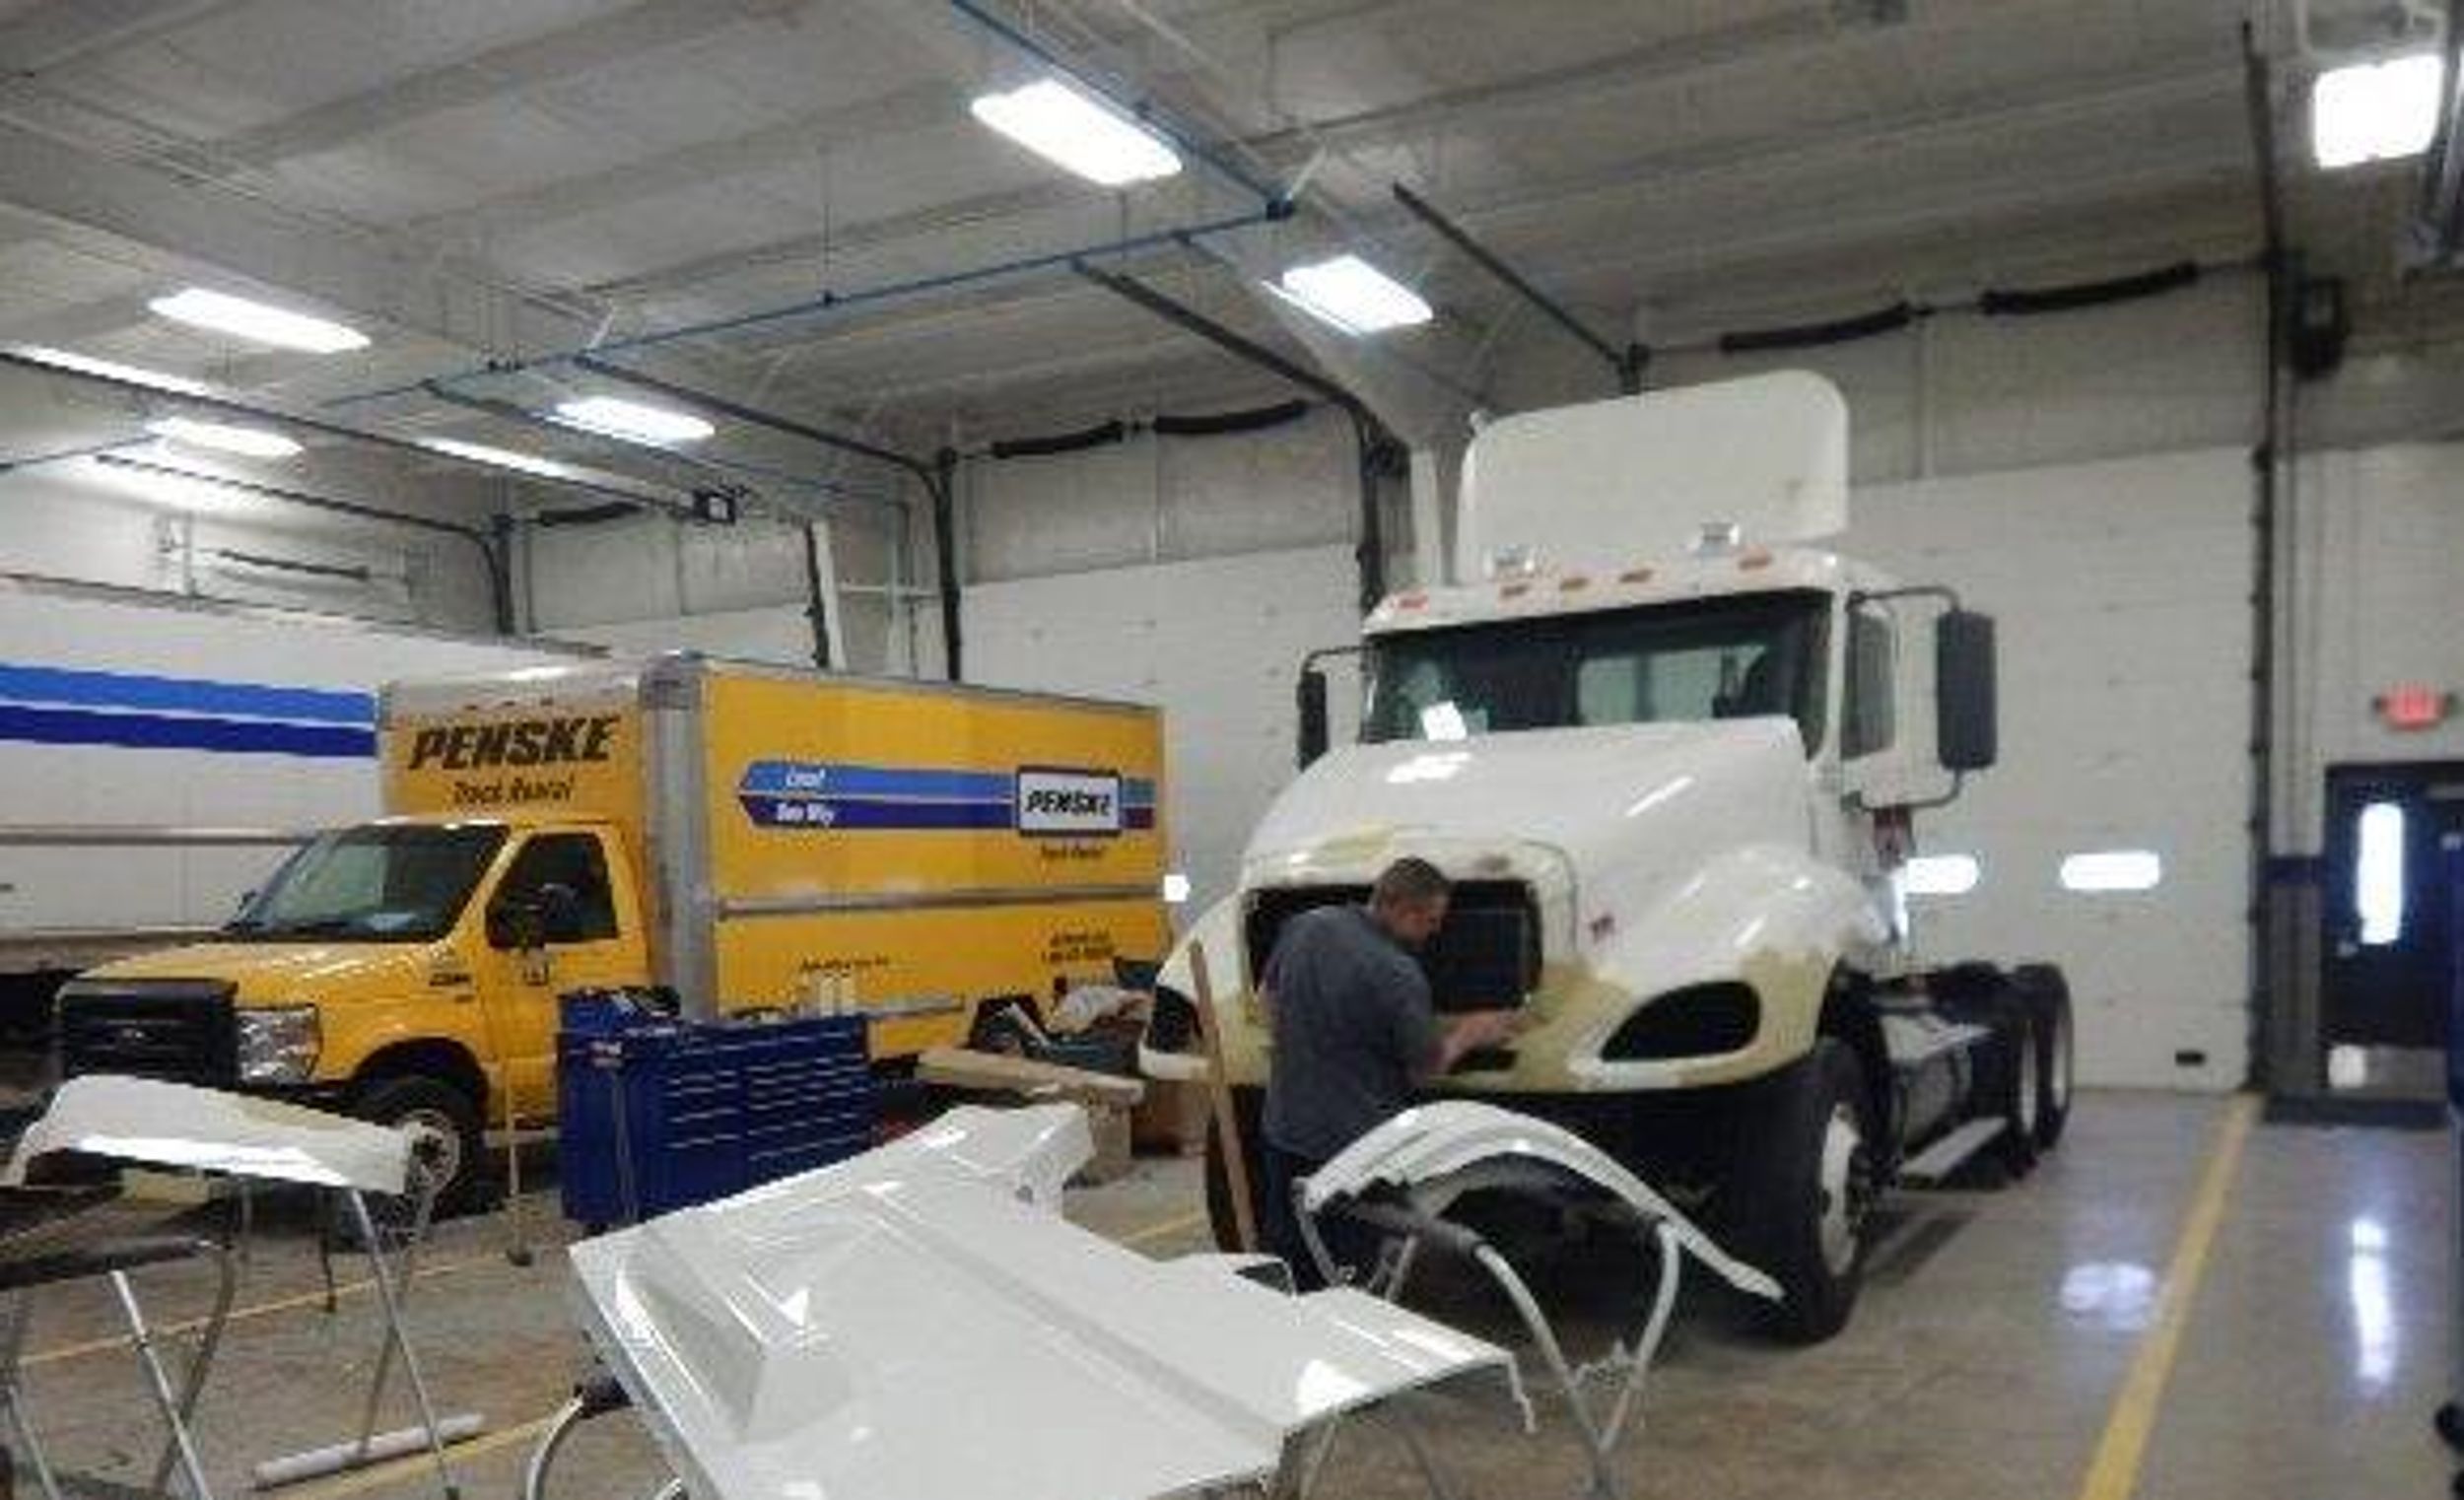 Penske Opens Truck Collision Repair Center in Fairless Hills, PA